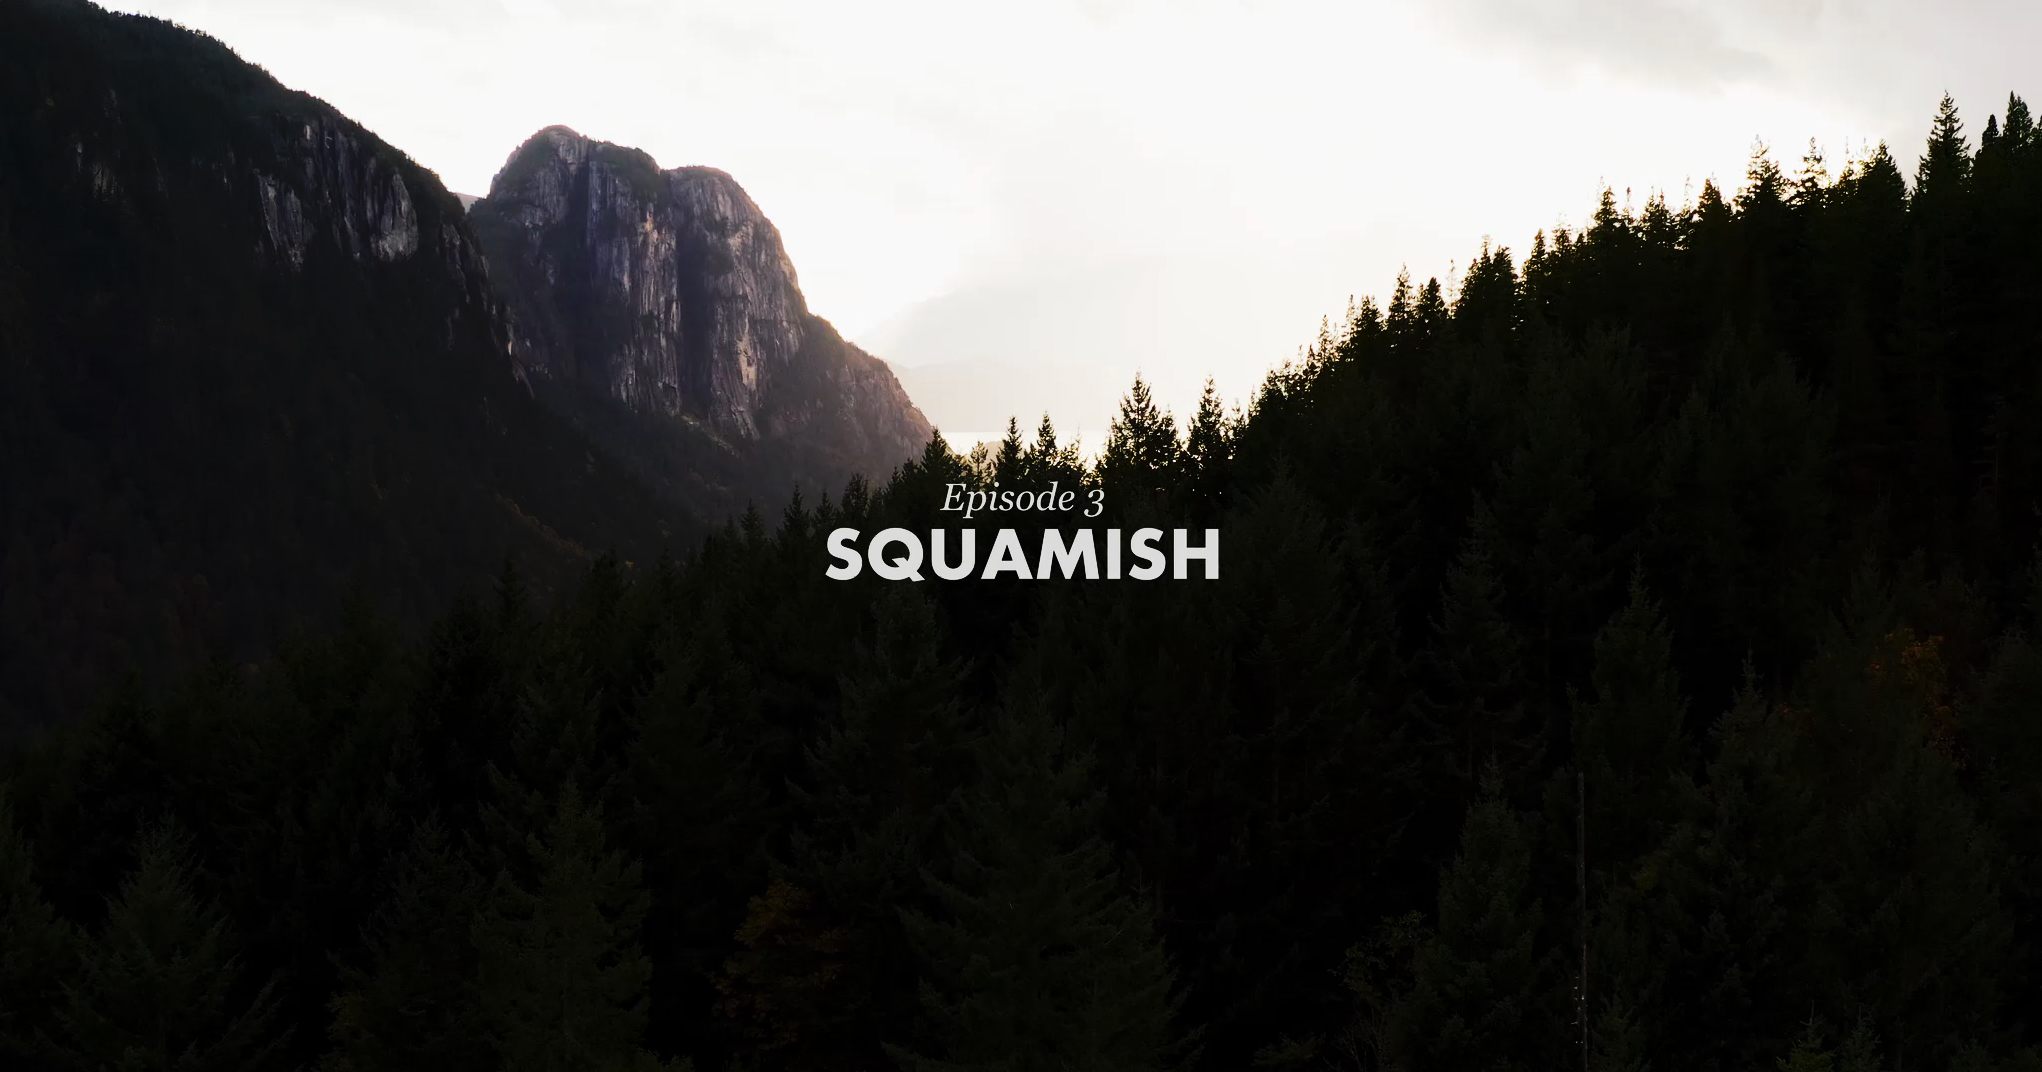 VIDEO: The SHOWCASE – Episode 3, Squamish